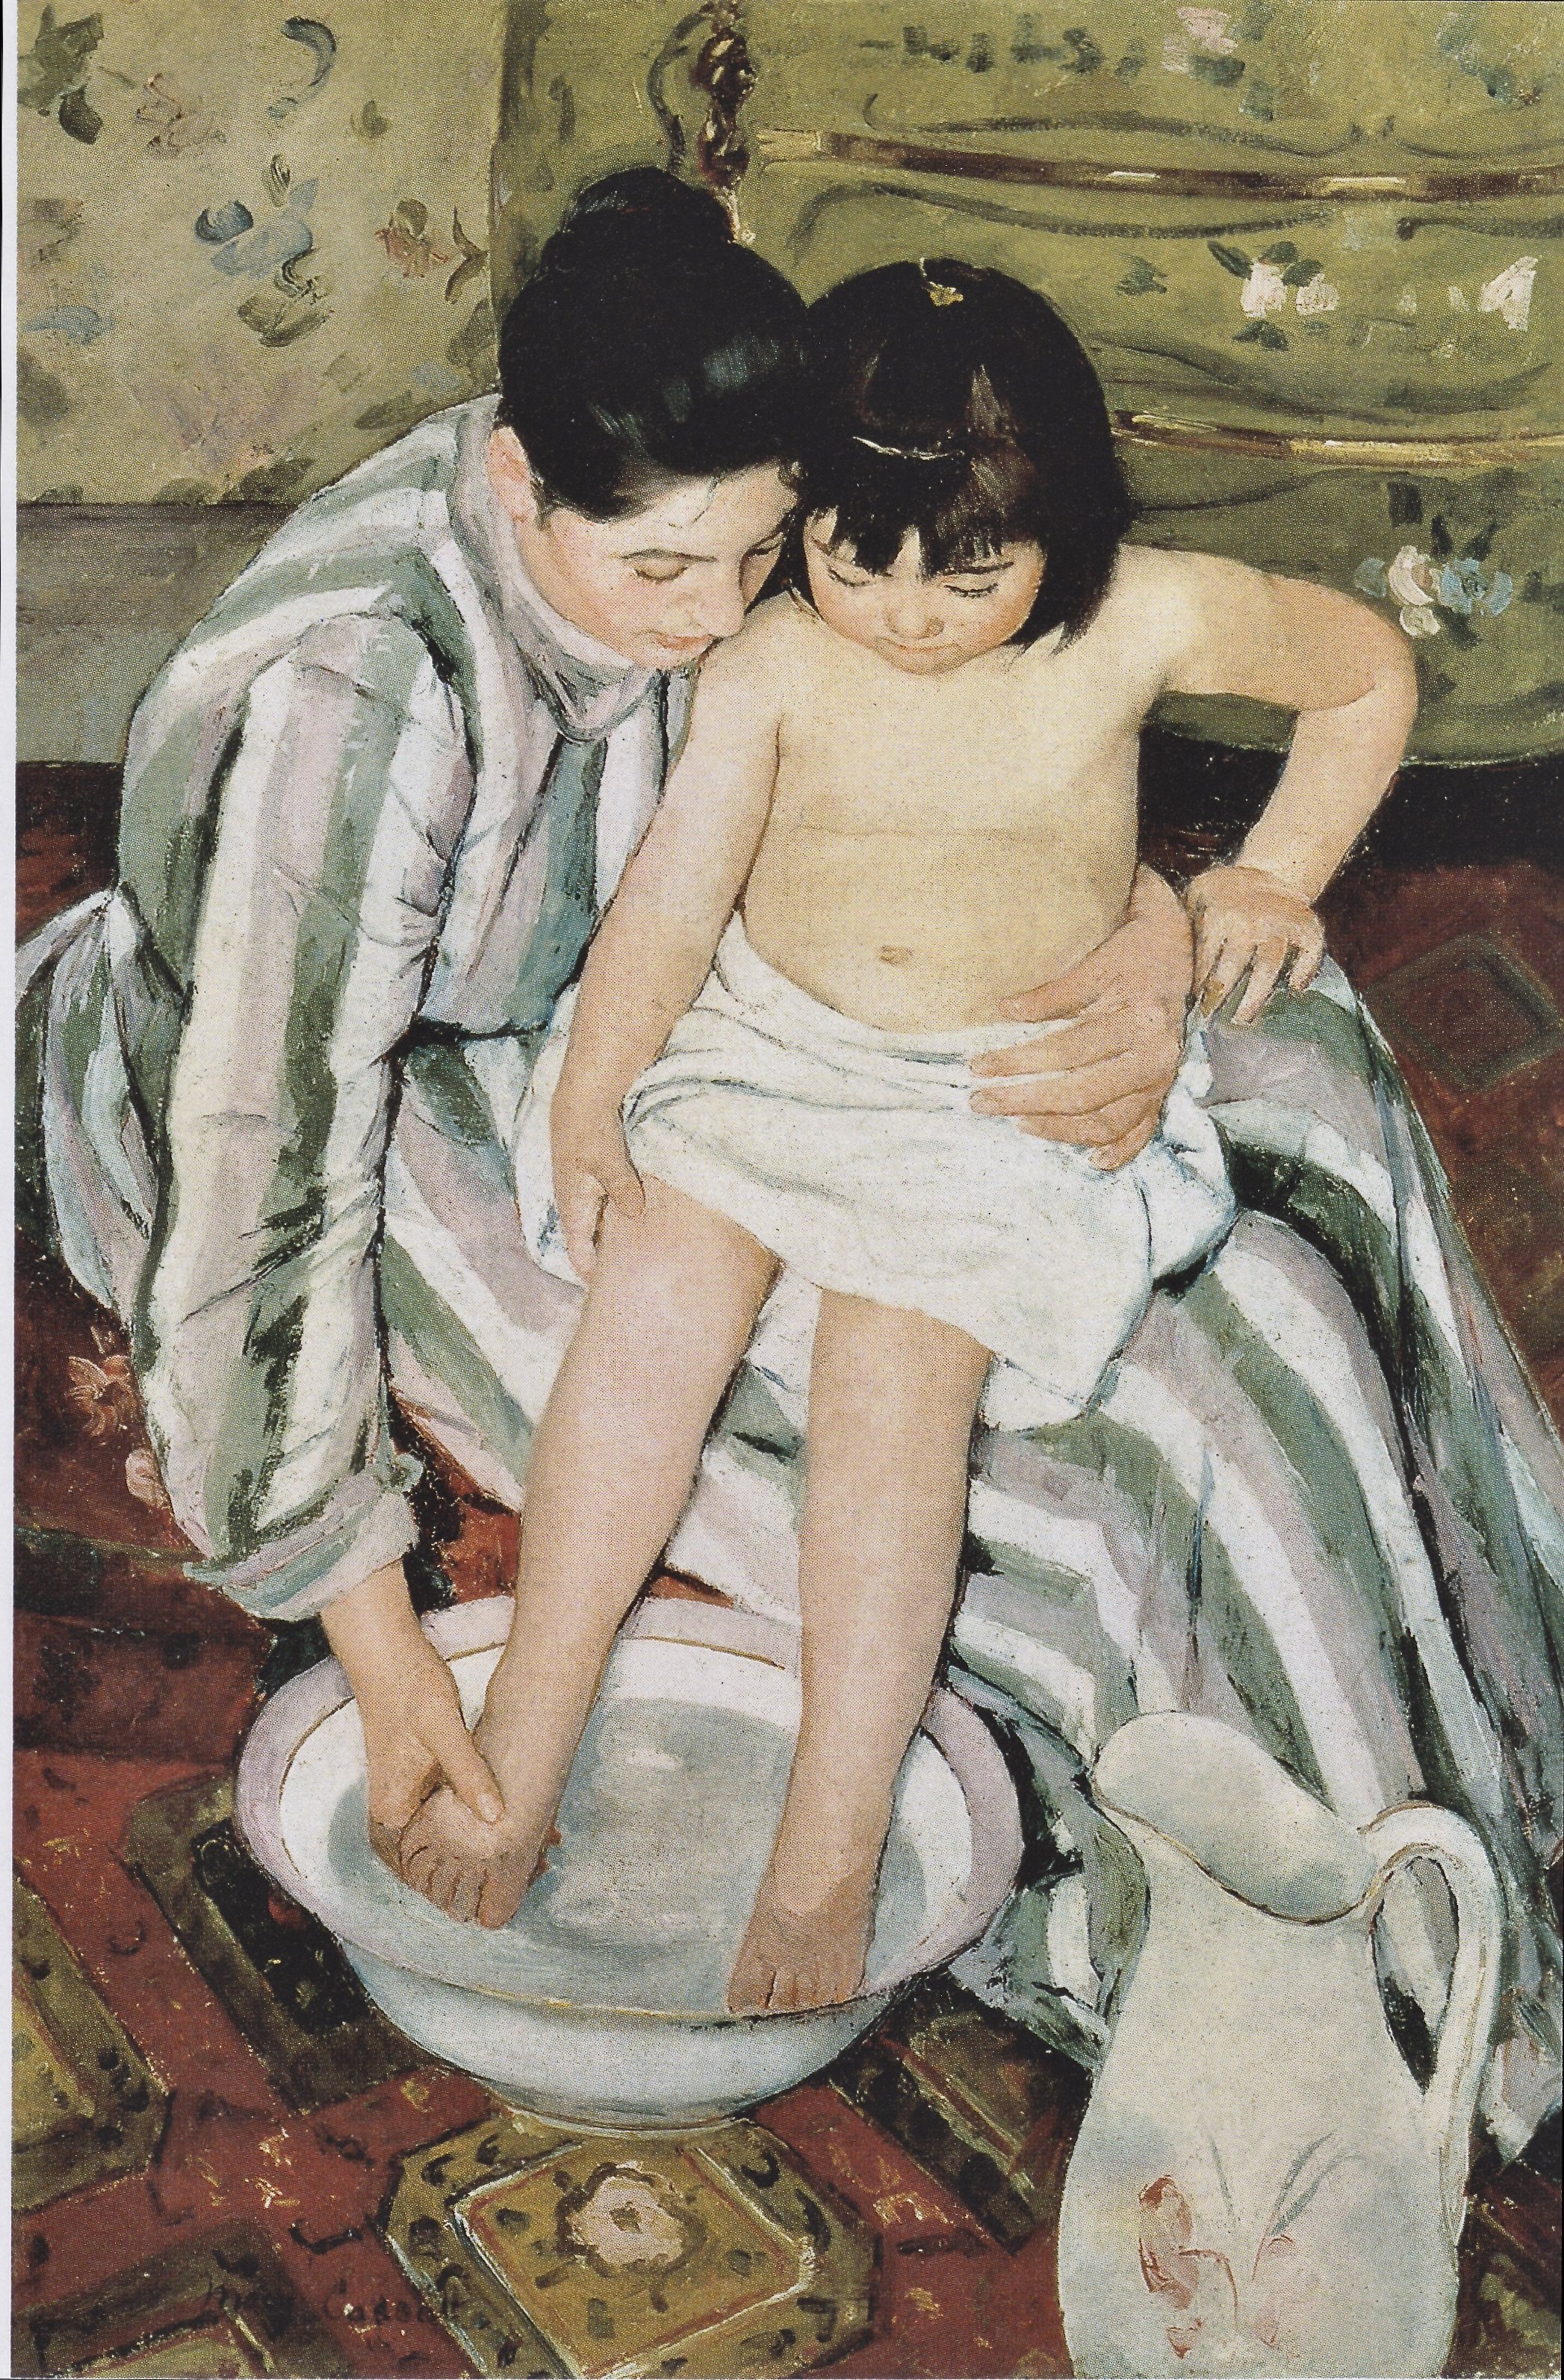 Mary_Cassatt_-_The_Child's_Bath_-_1893